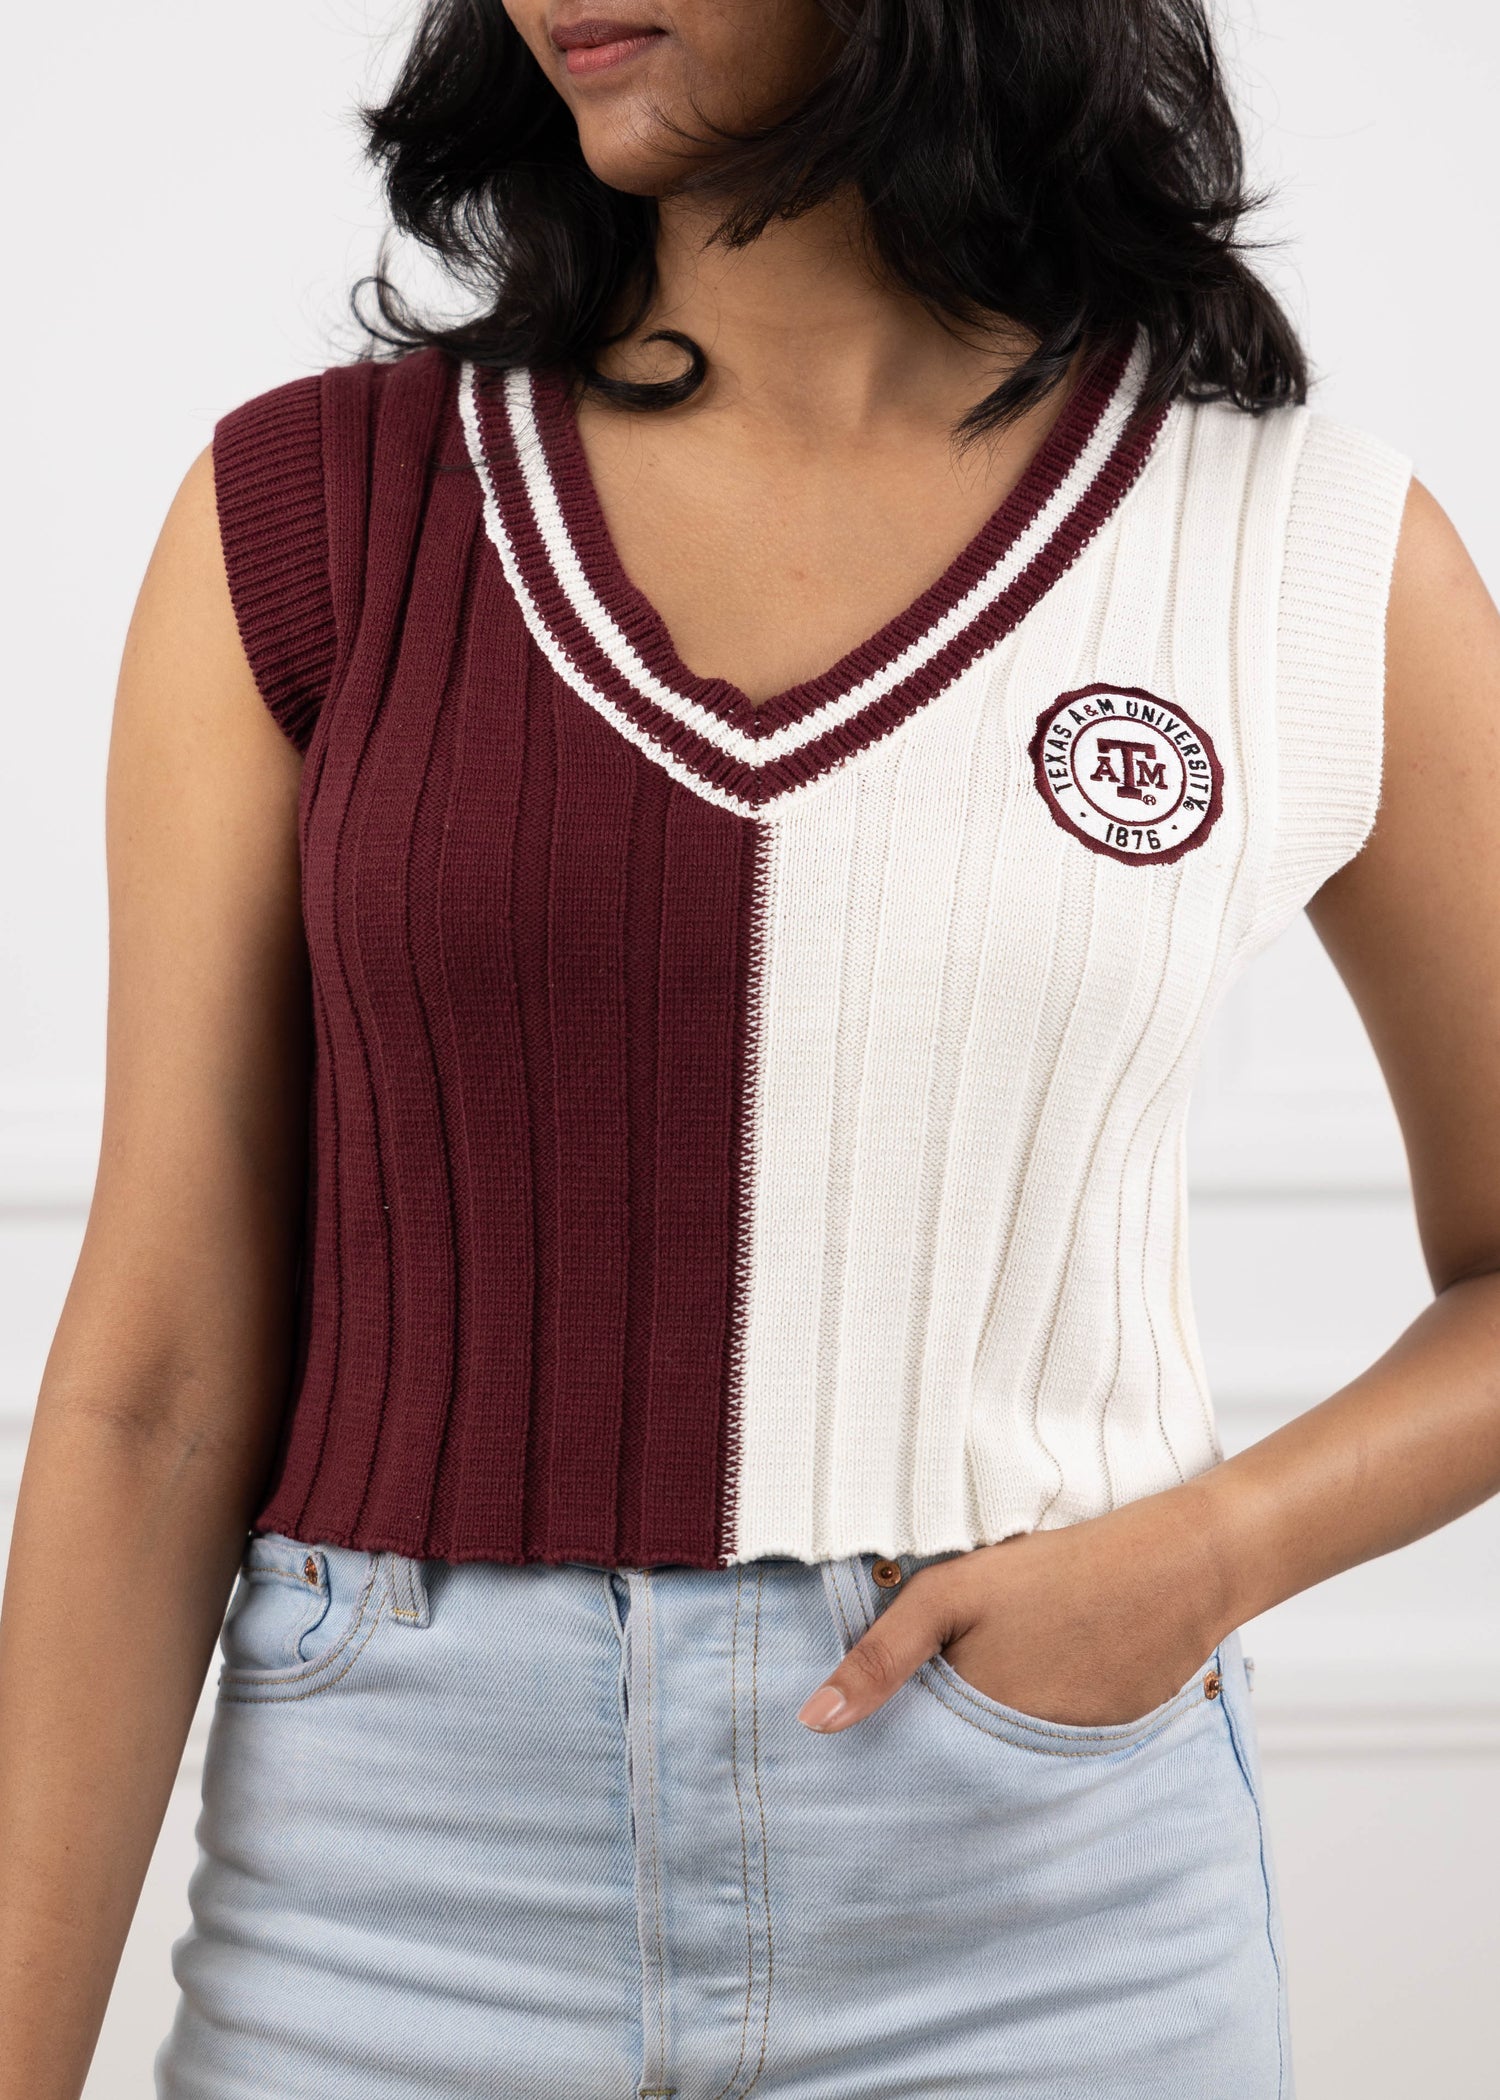 Texas A&M University Dark Maroon & Cream Chloe Knit Vest Top